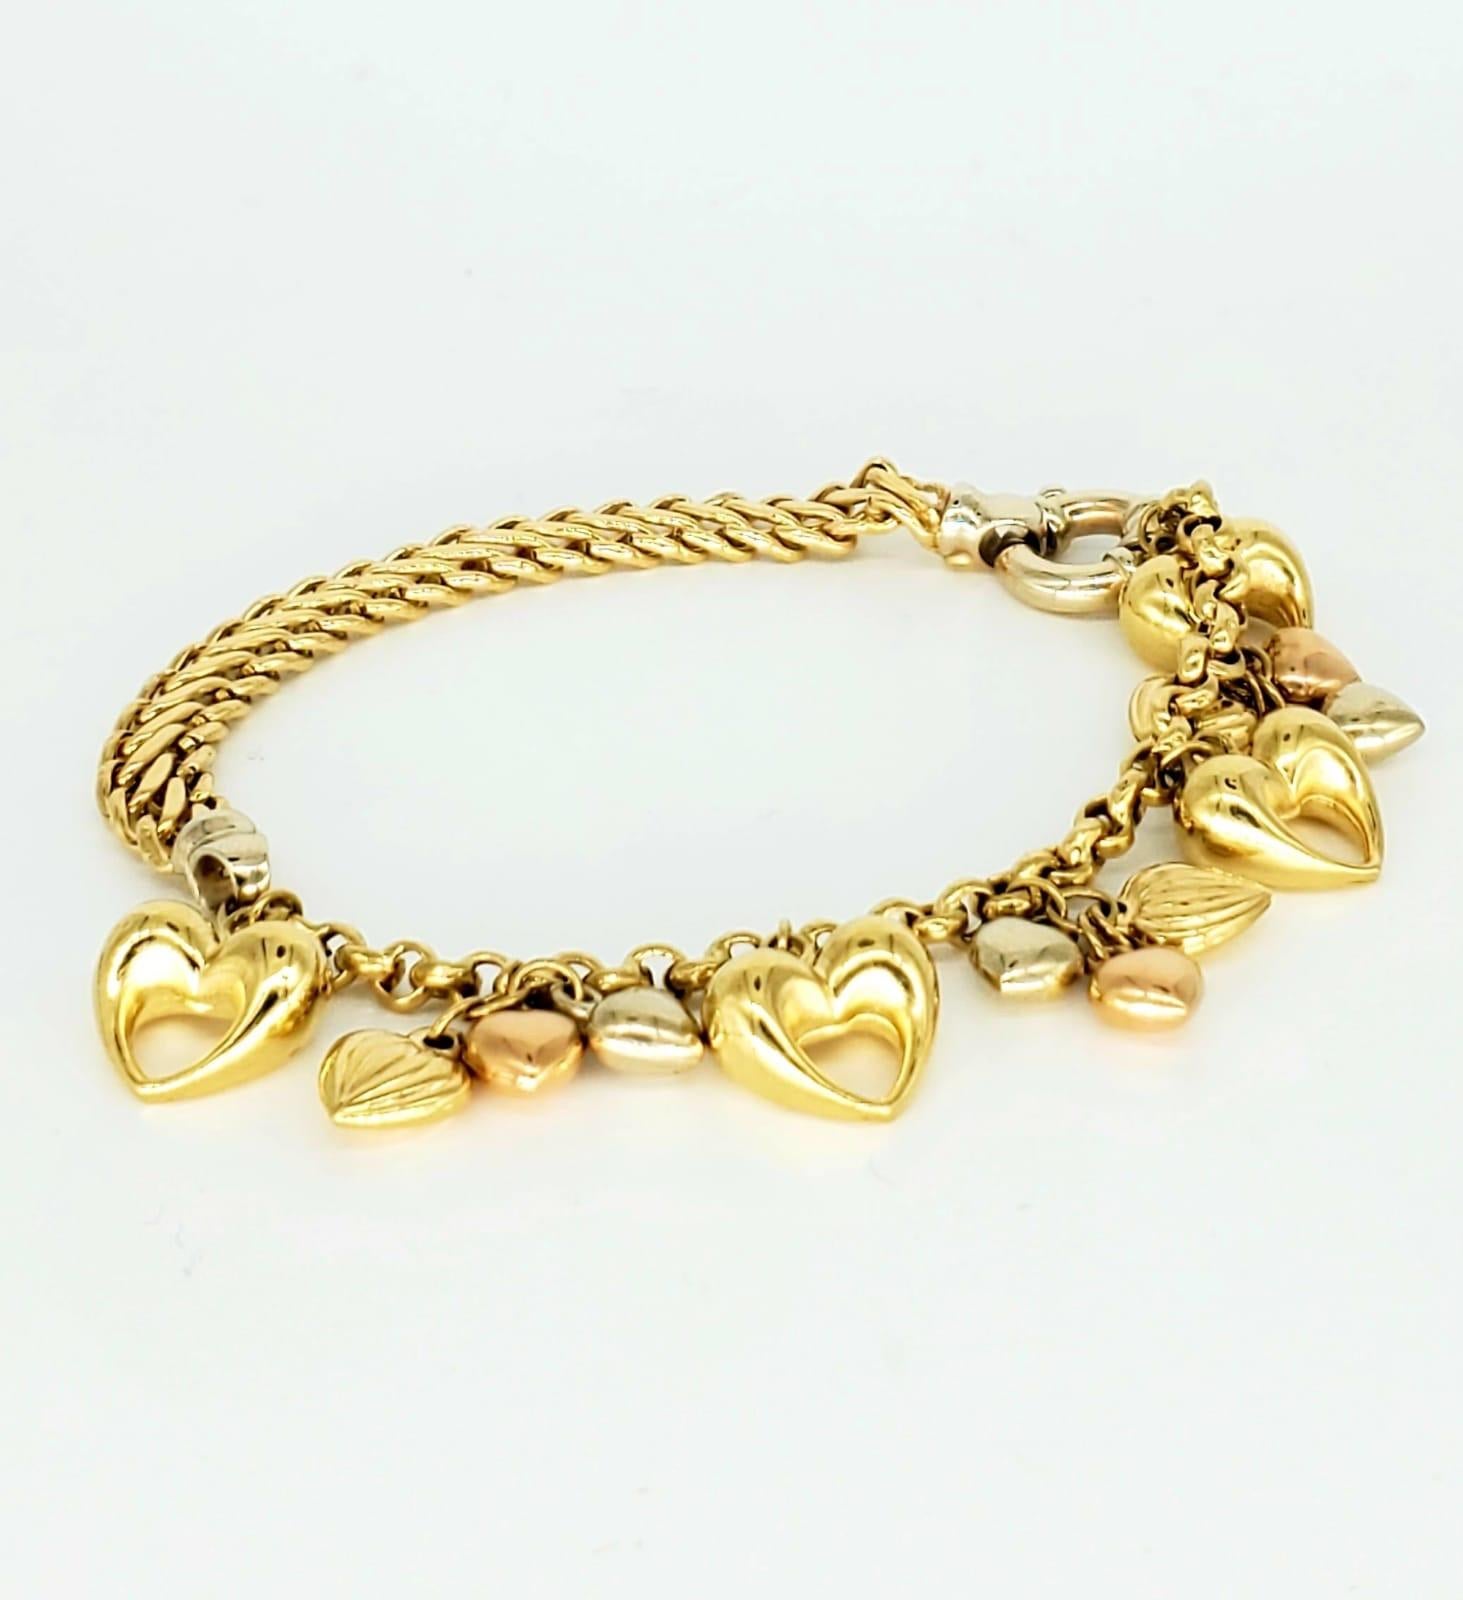 Vintage Kingdom of Hearts 18k Gold Bracelet. The bracelet is beautiful and noticeable in public. The bracelet is 7.5 inches in length and is 6.5mm wide. The bracelet is made of 18k gold and features yellow gold, white gold and rose gold hearts. The